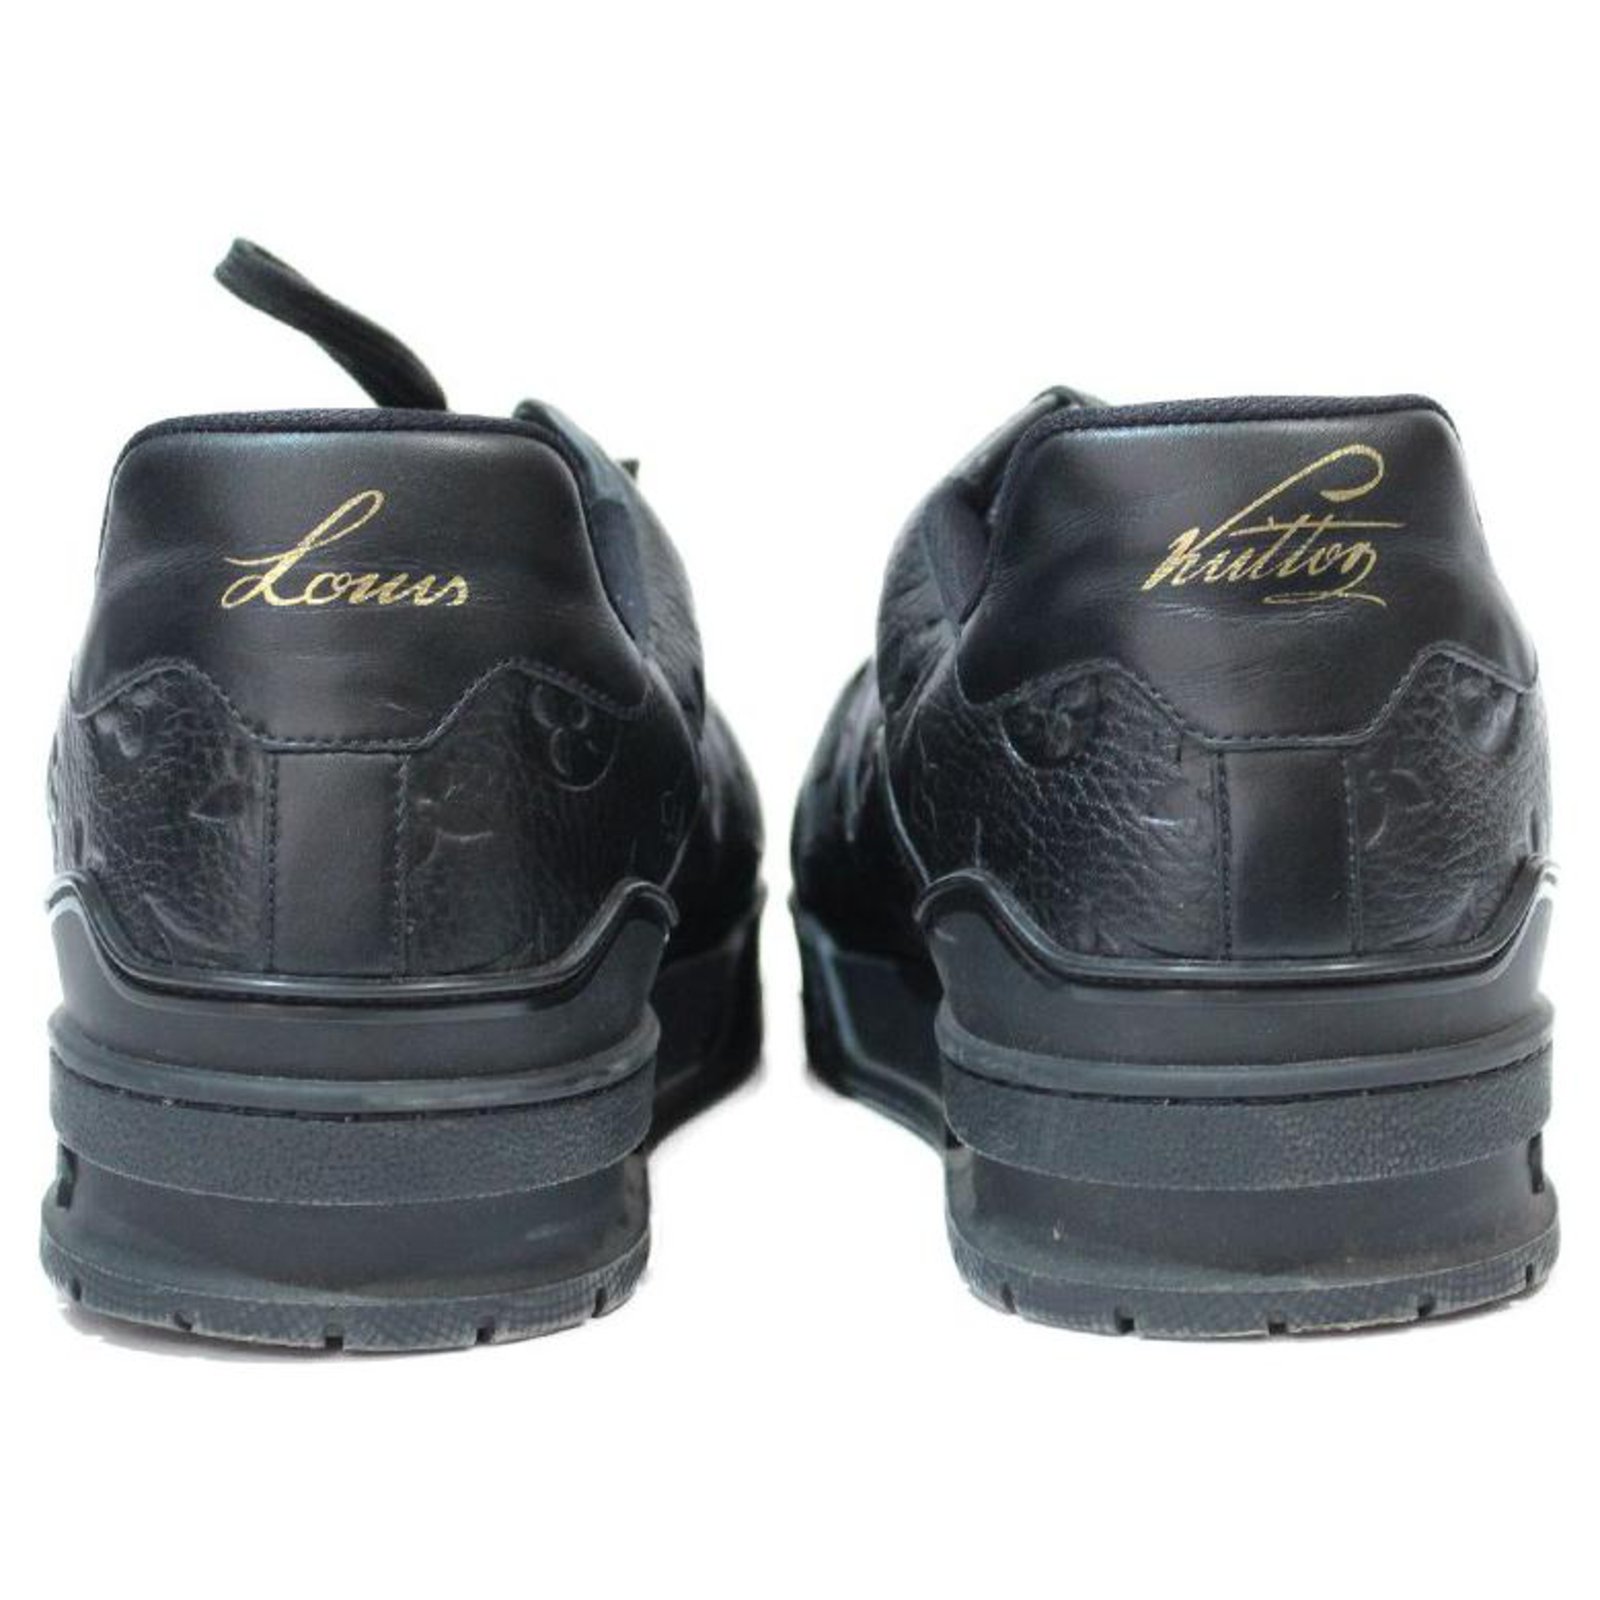 Louis Vuitton - Authenticated Fuselage Trainer - Leather Black Plain for Men, Very Good Condition